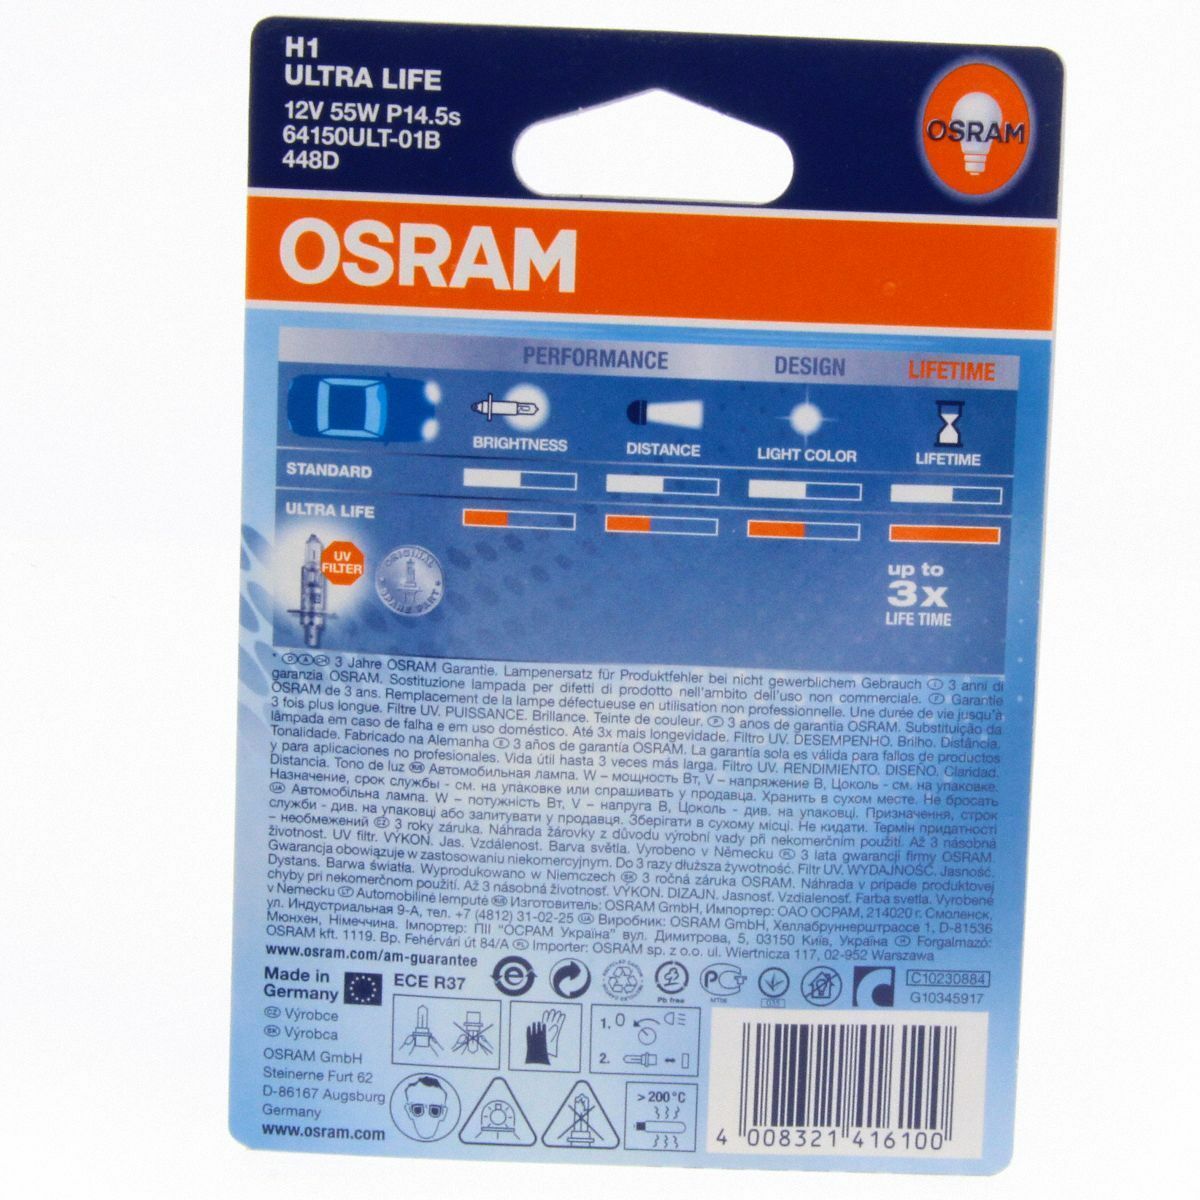 H1 OSRAM Ultra Life 3x Longlife Halogenlampe 64150ULT-01B Blister Box 1 Stück